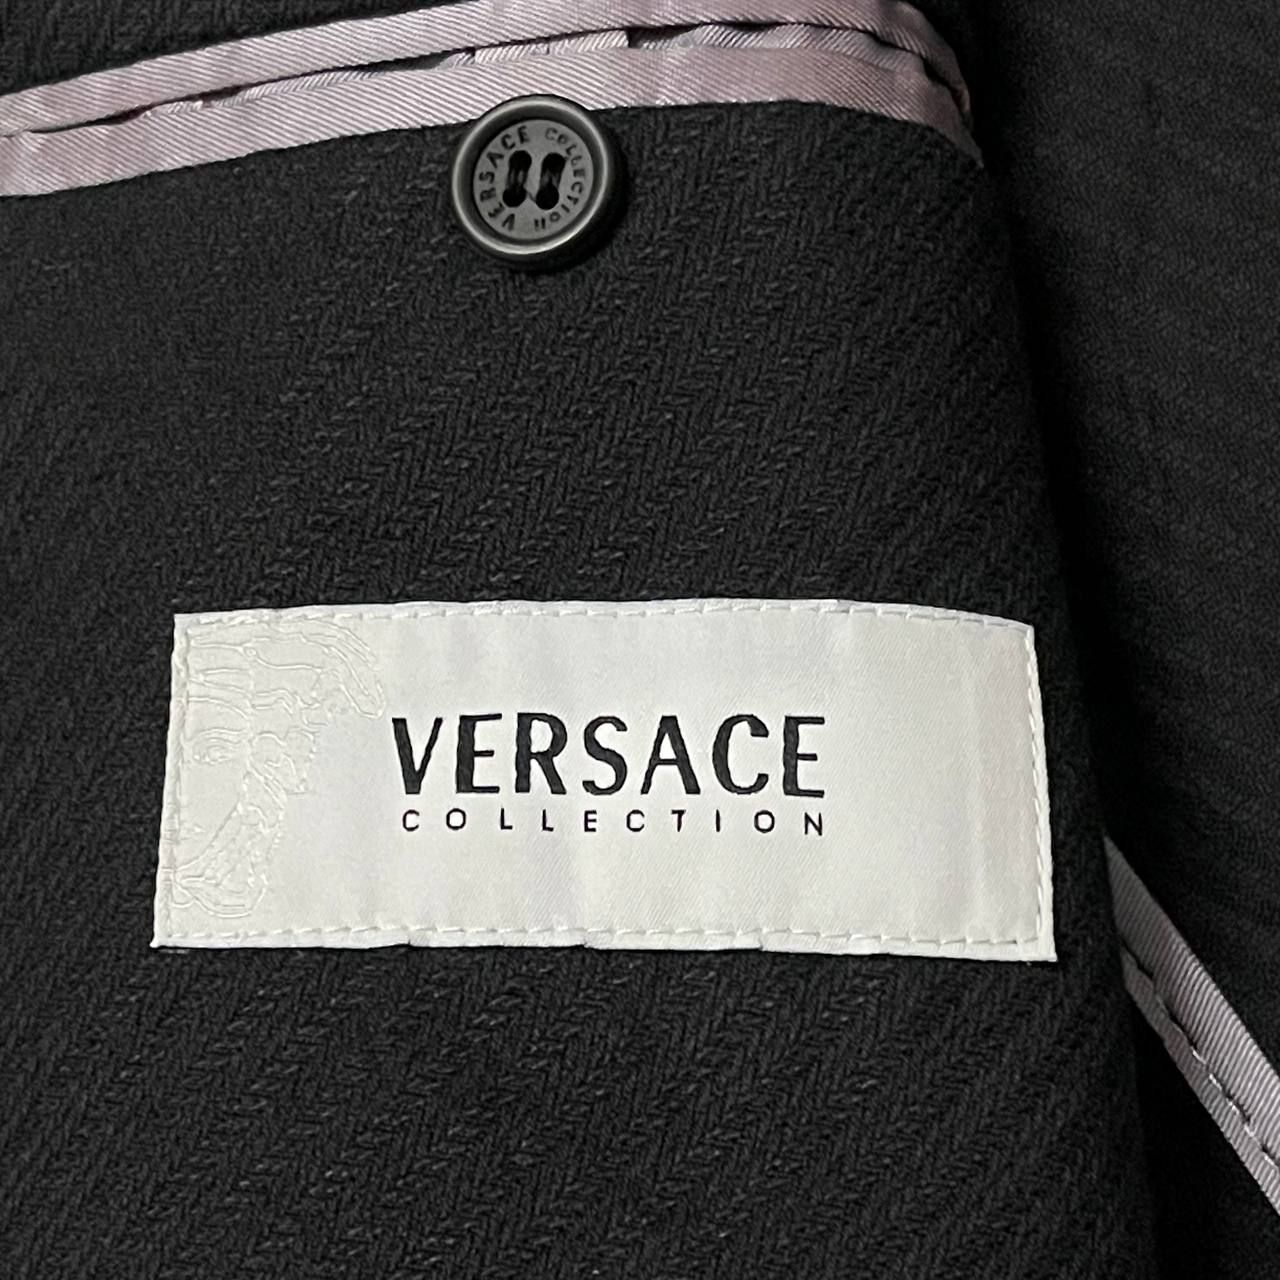 Versace Collection Coat Jacket - 11